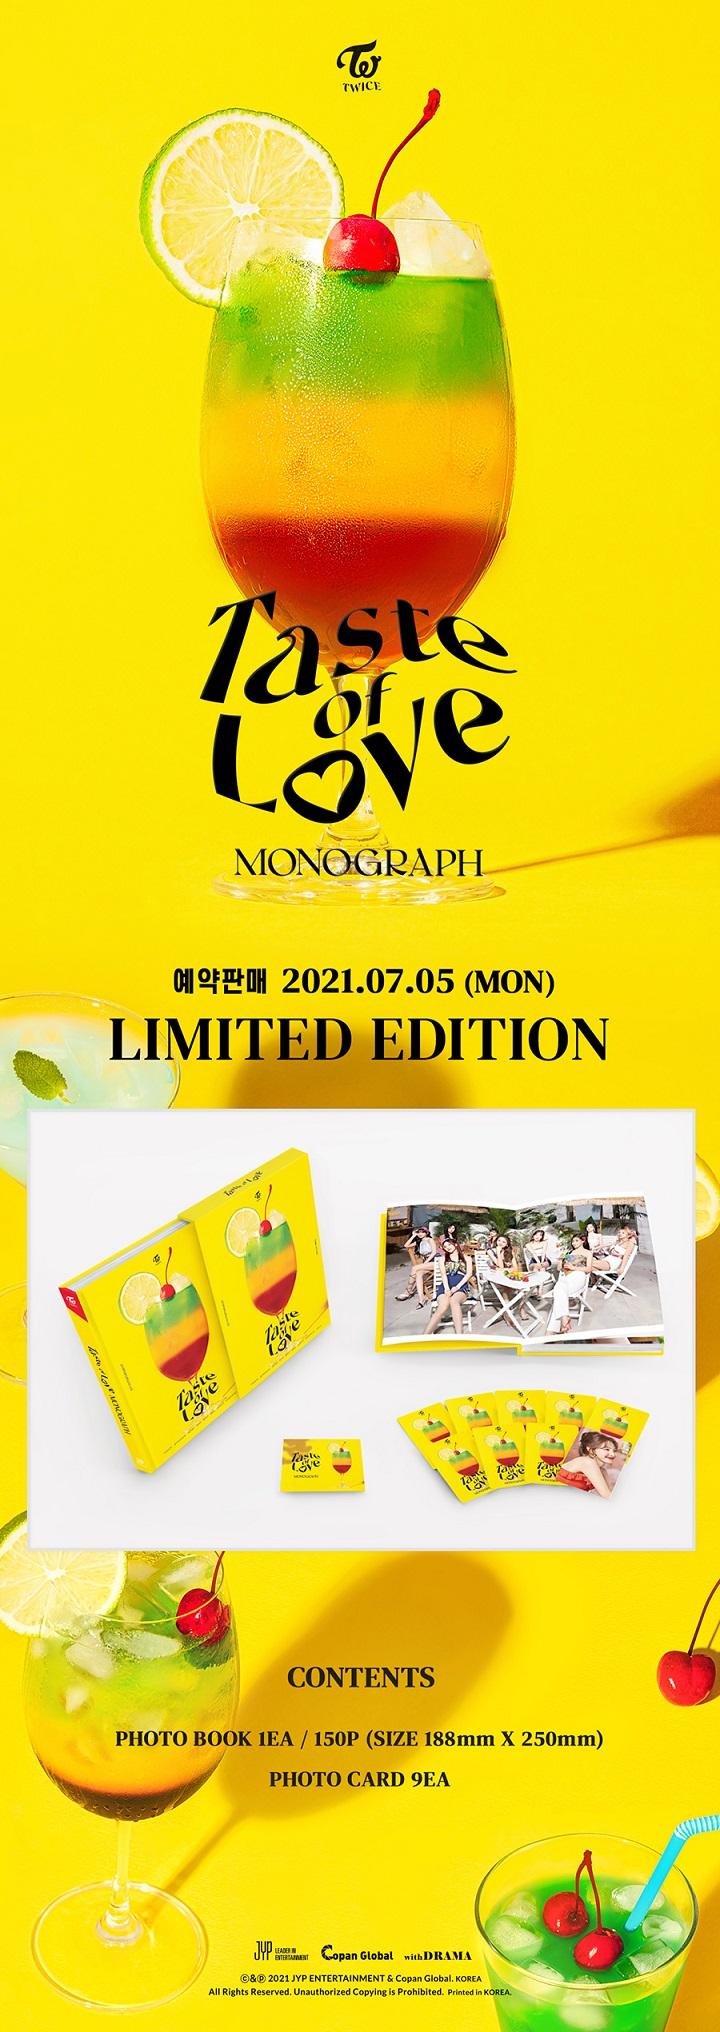 PhotoBook de TWICE MONOGRAPH TASTE OF LOVE 1